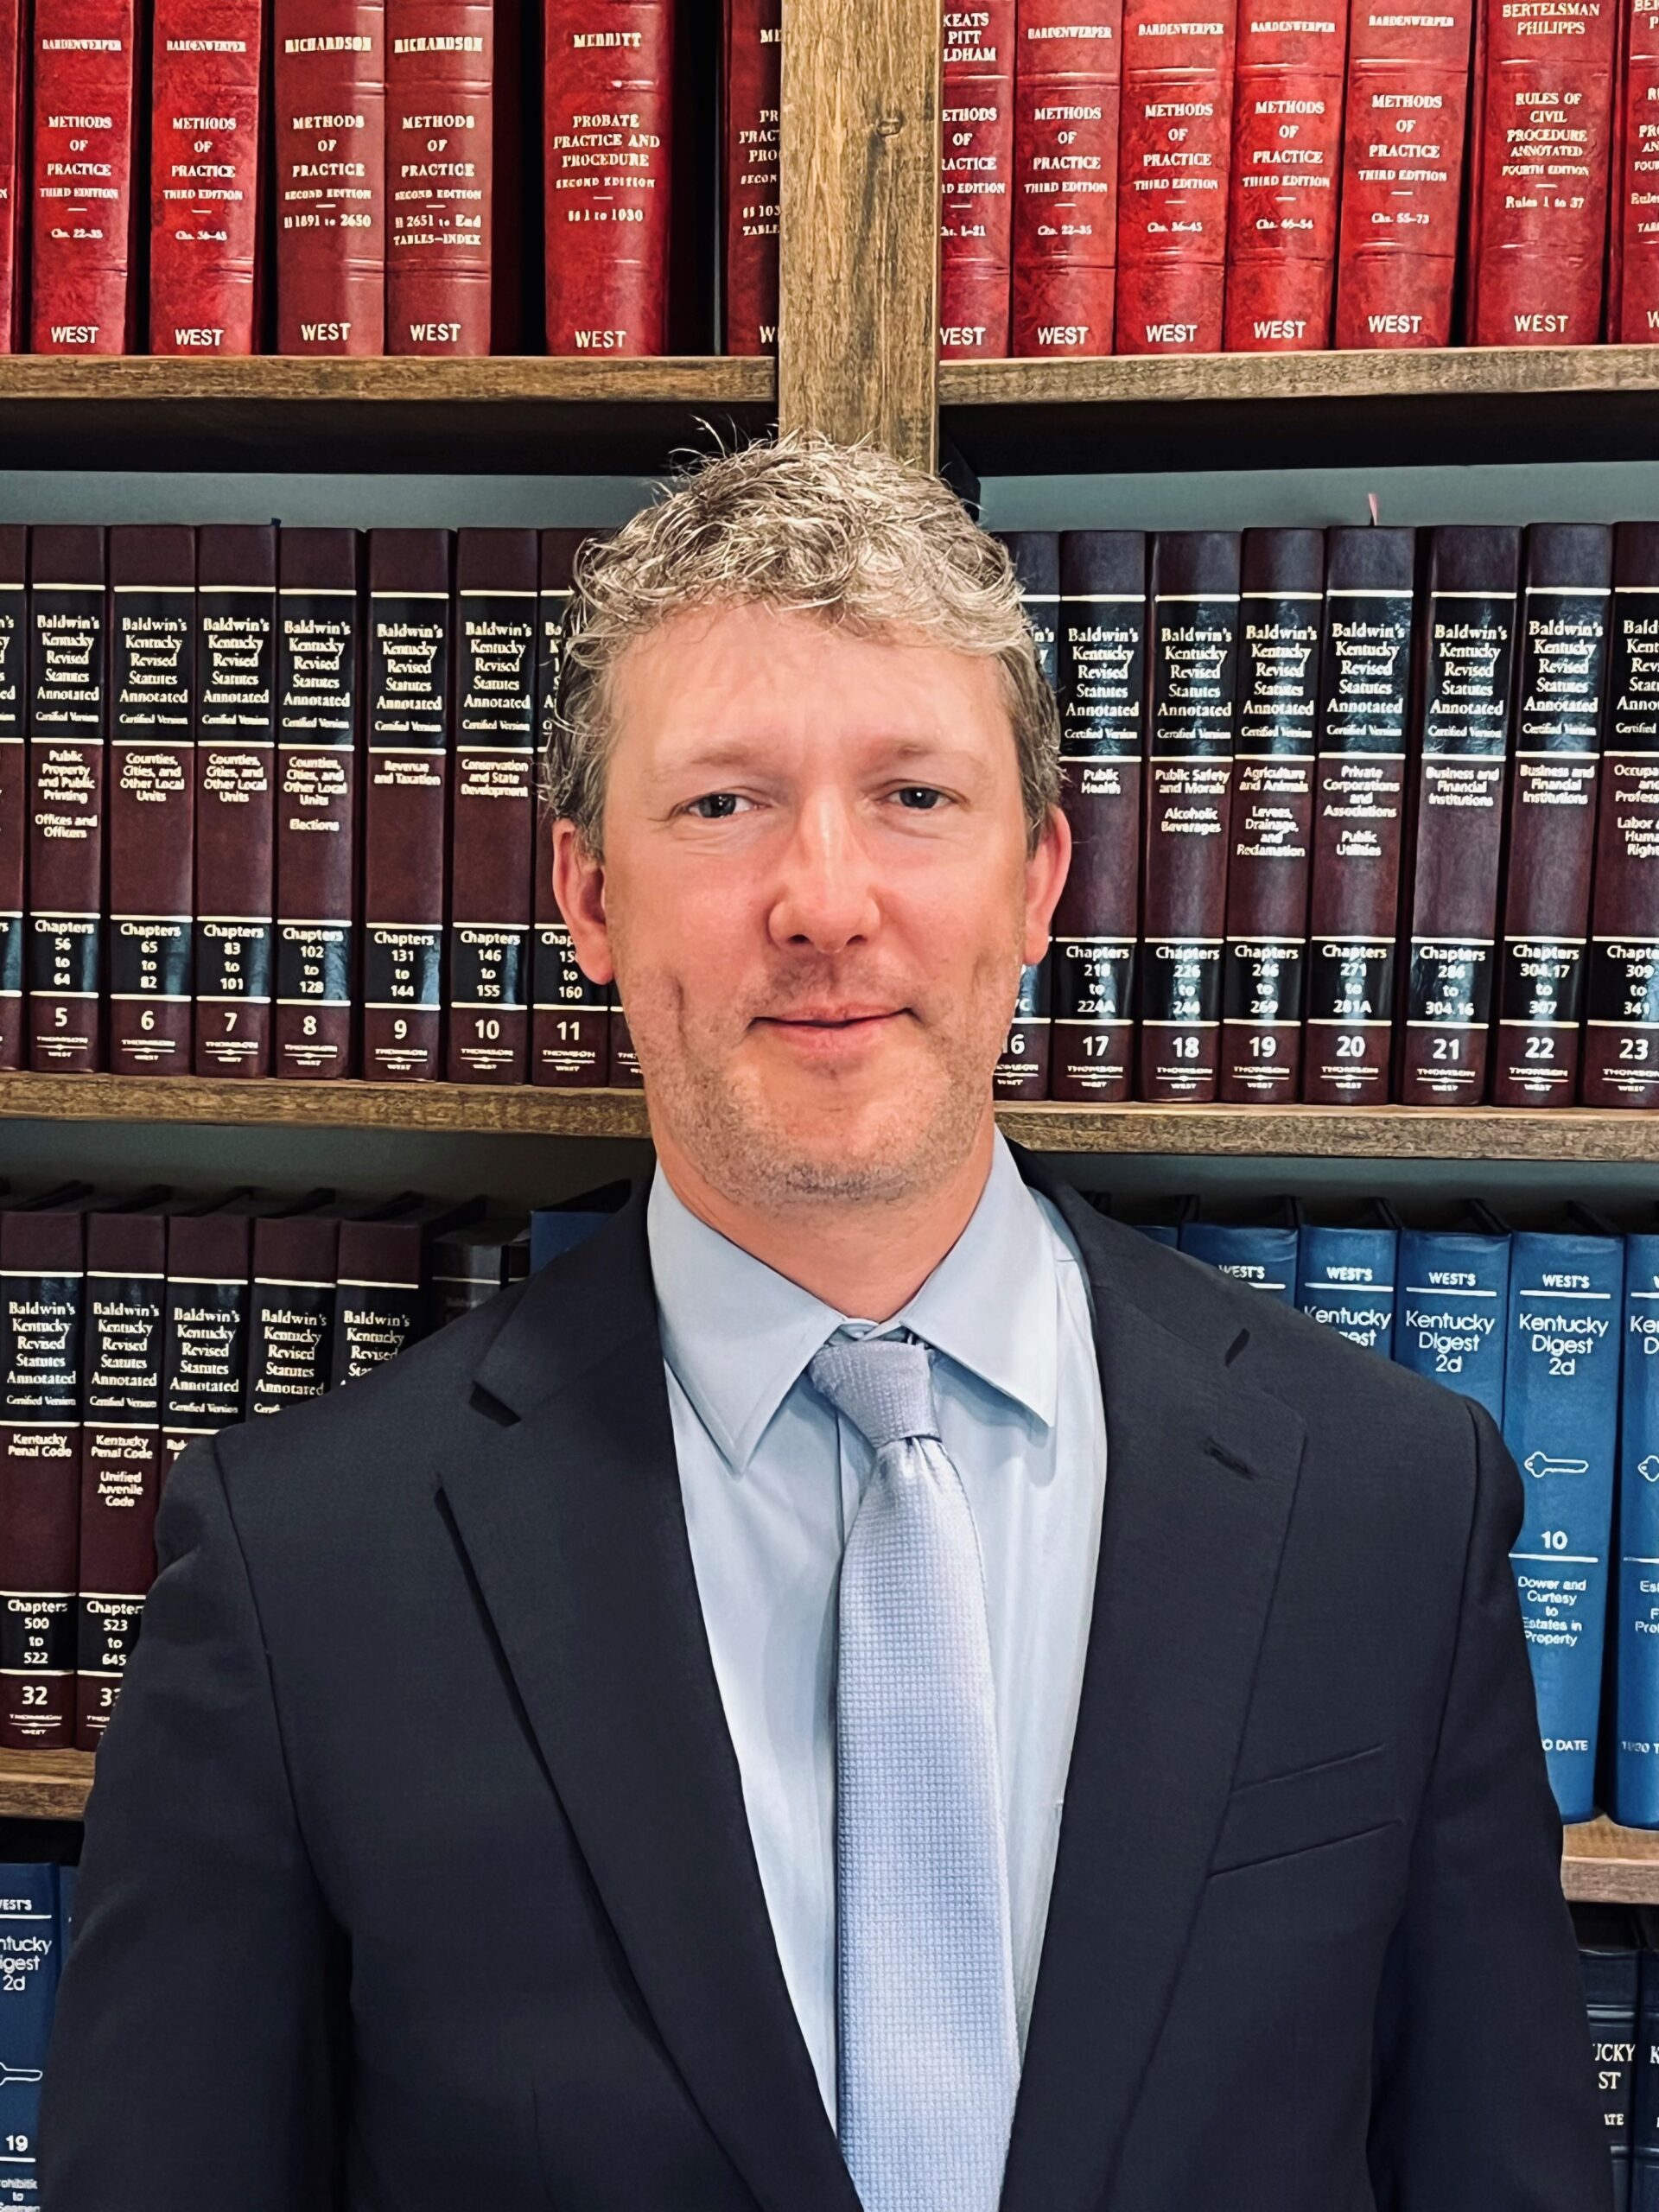 G. Adam Redden
personal injury lawyer
personal injury law